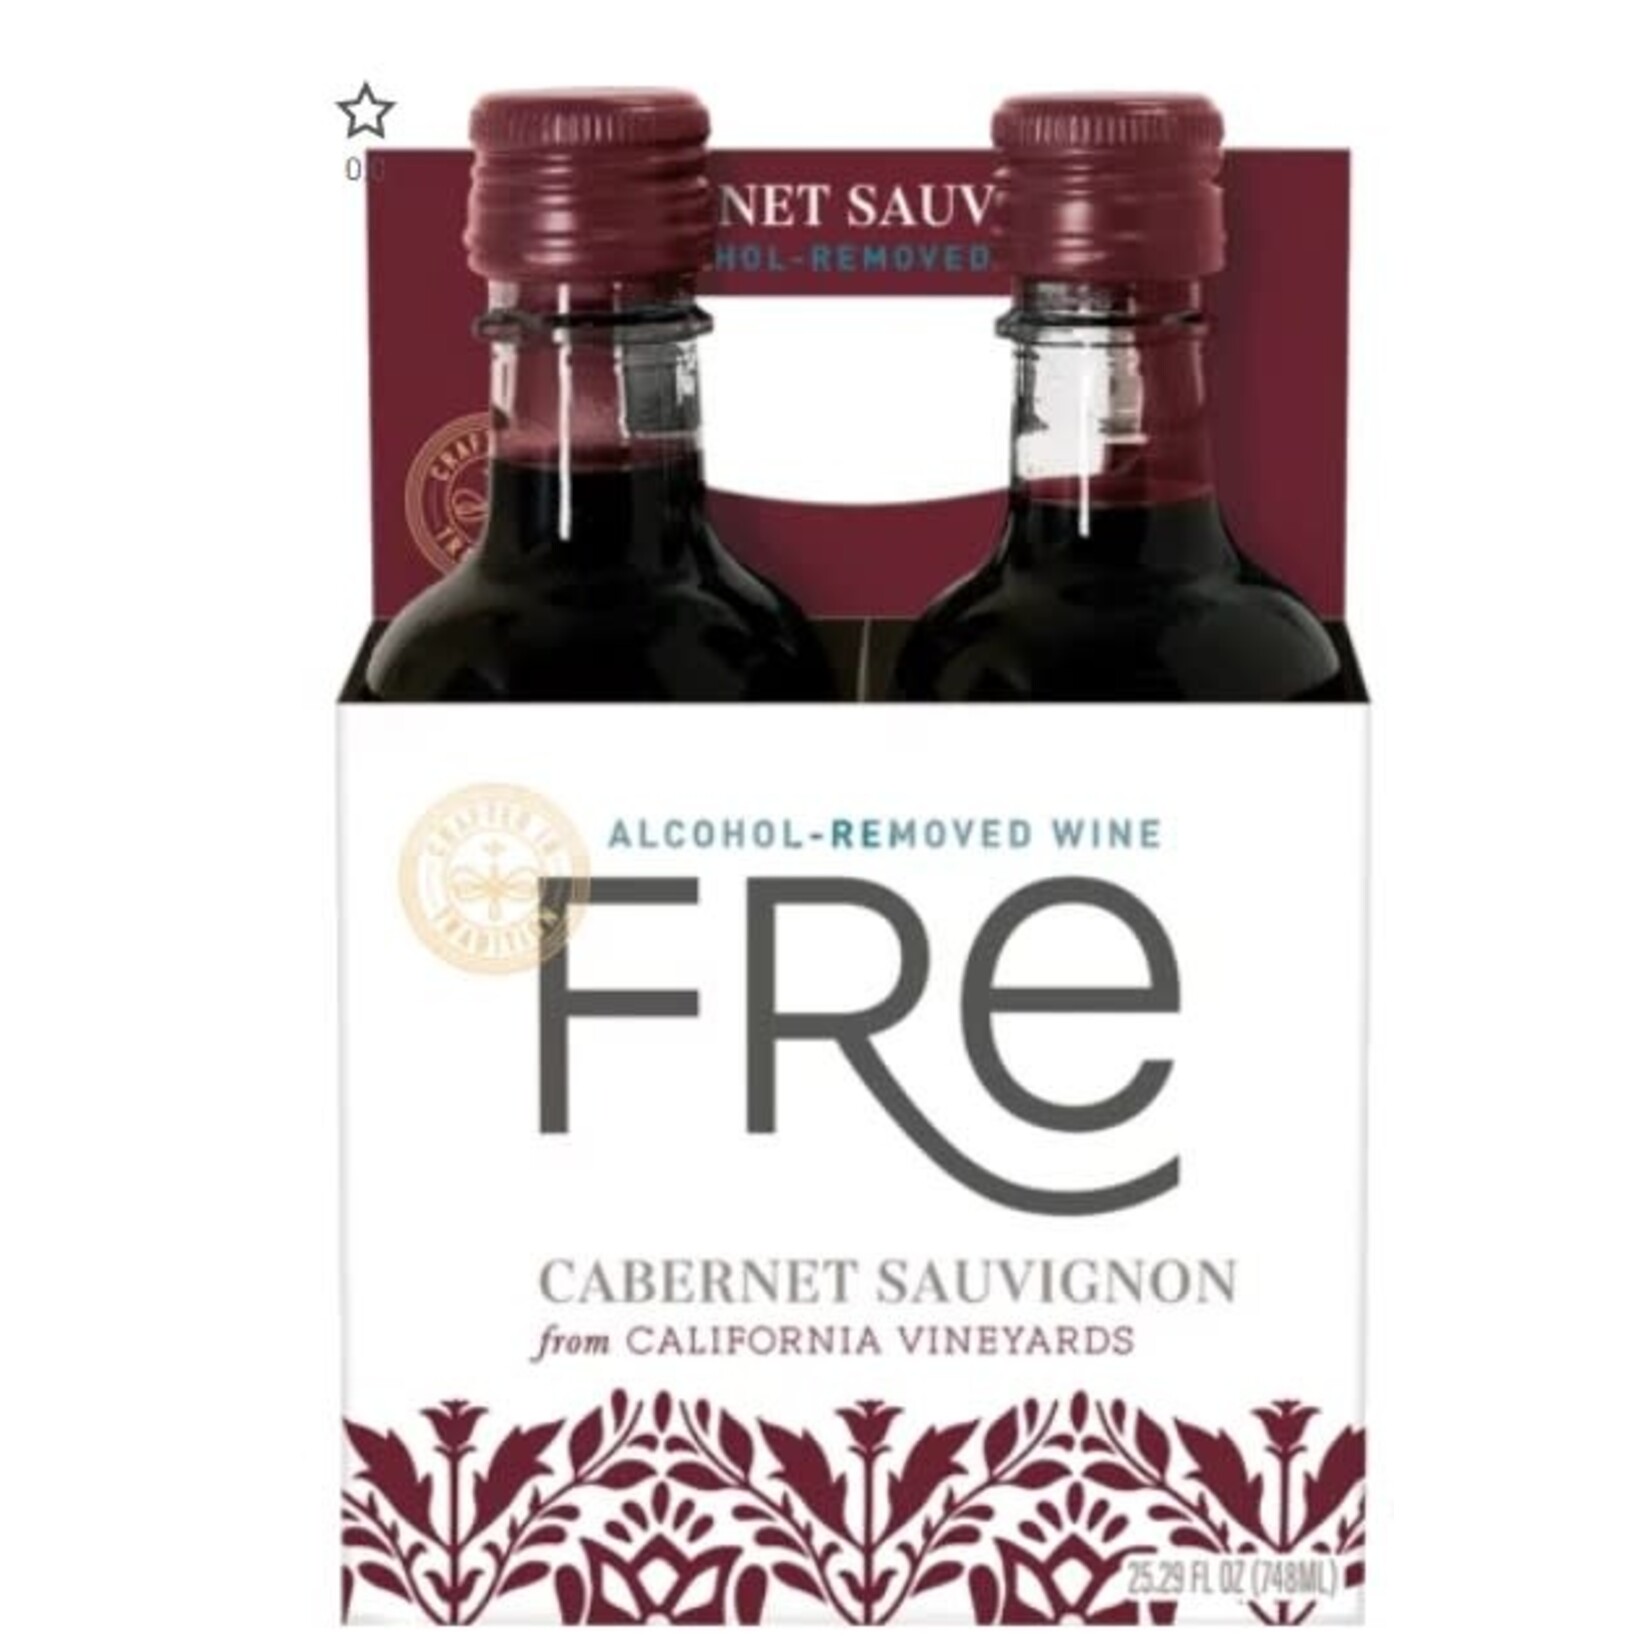 Fre Cabernet Sauvignon California Vineyards Alcohol-Removed Wine 4-Pk 187ml